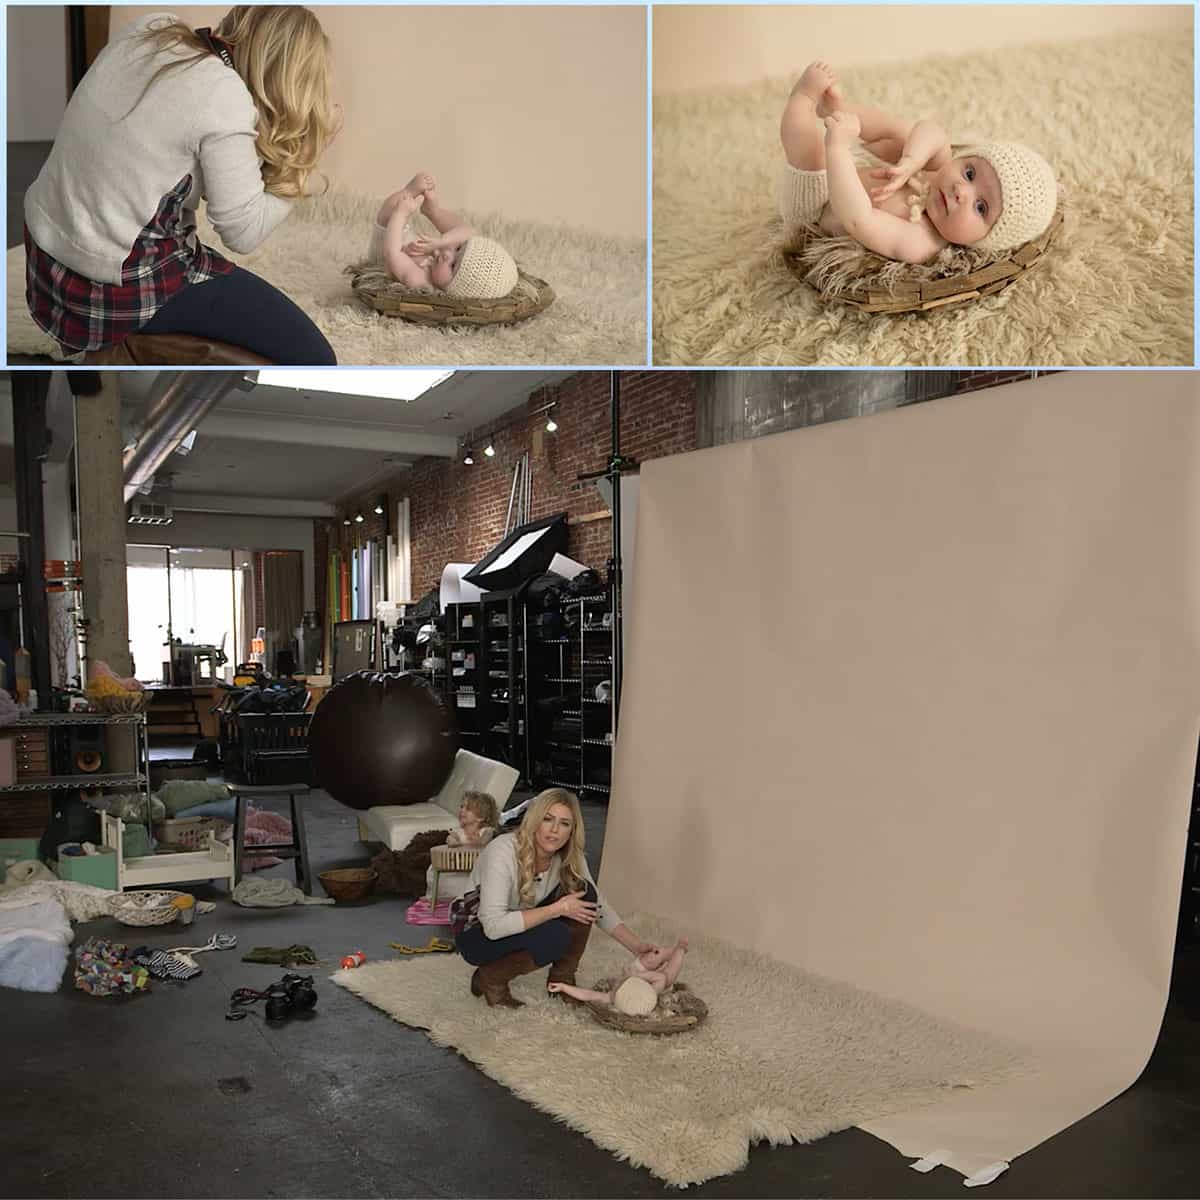 Baby& First Year Photography Tutorial | Photographer Course  - PRO EDU Stephanie Cotta PRO EDU